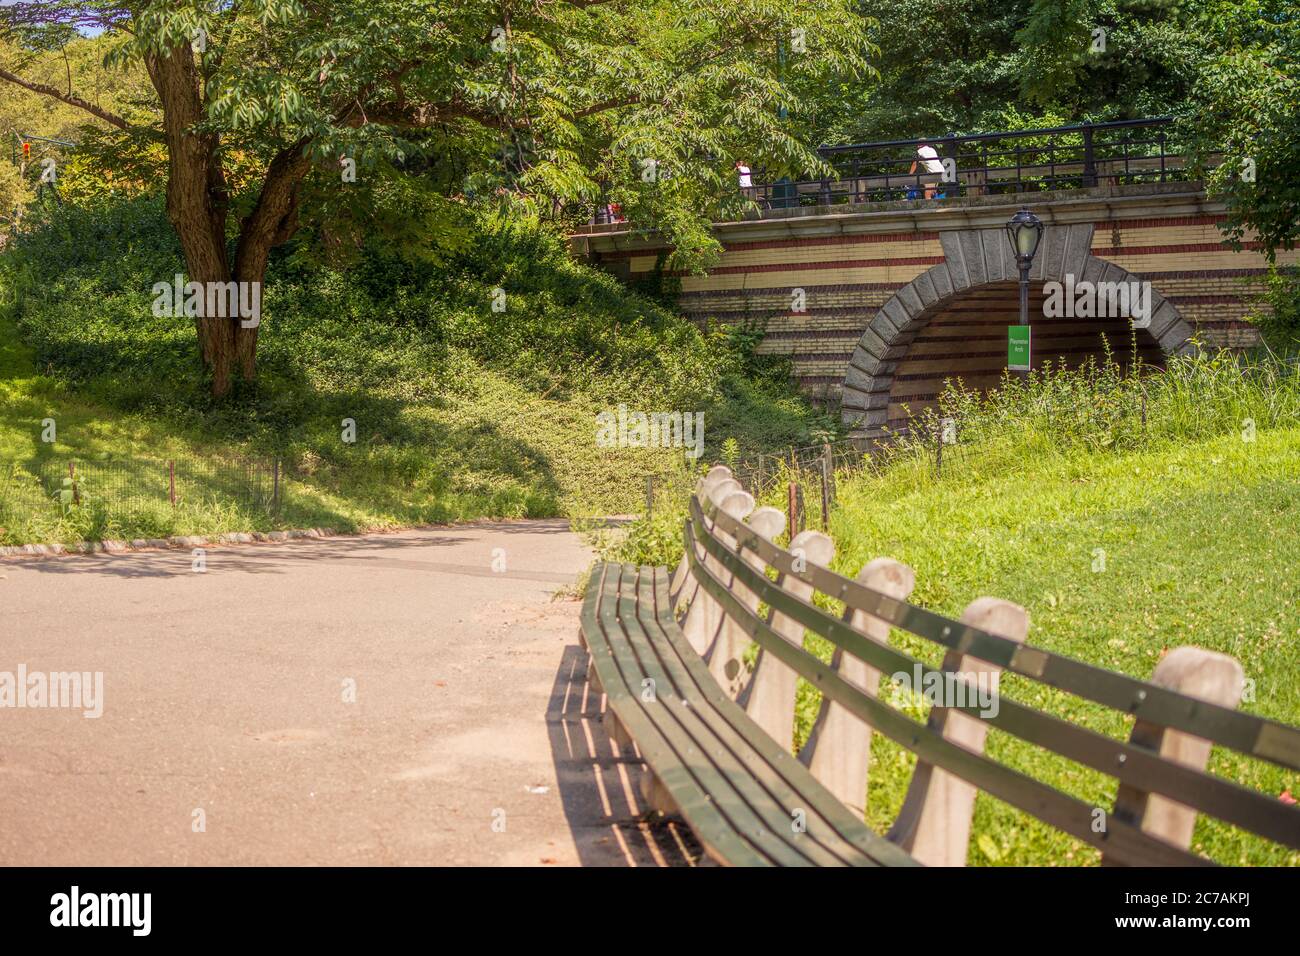 New York, NY / USA - July 24, 2019: Playmates Arch In Central Park Stock Photo